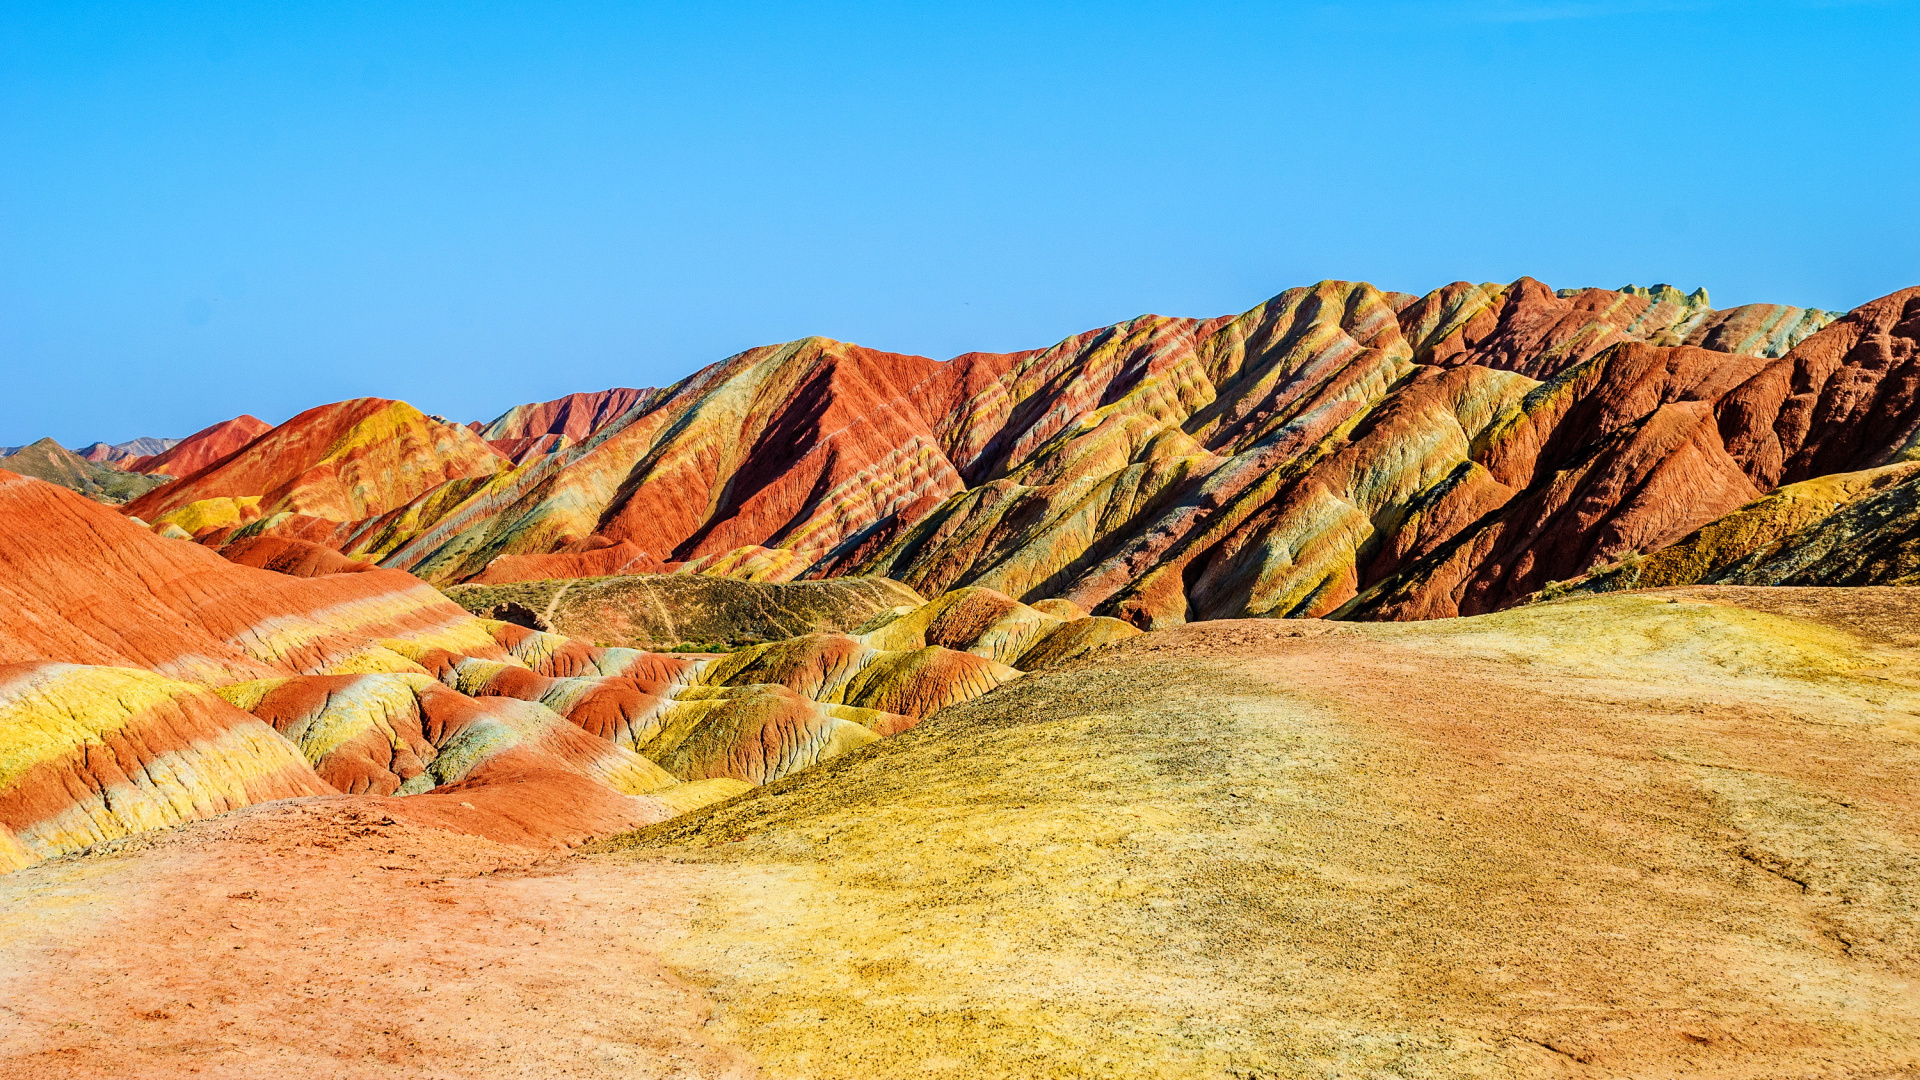 Цветные скалы Чжанъе Данксиа, Ганьсу, Китай